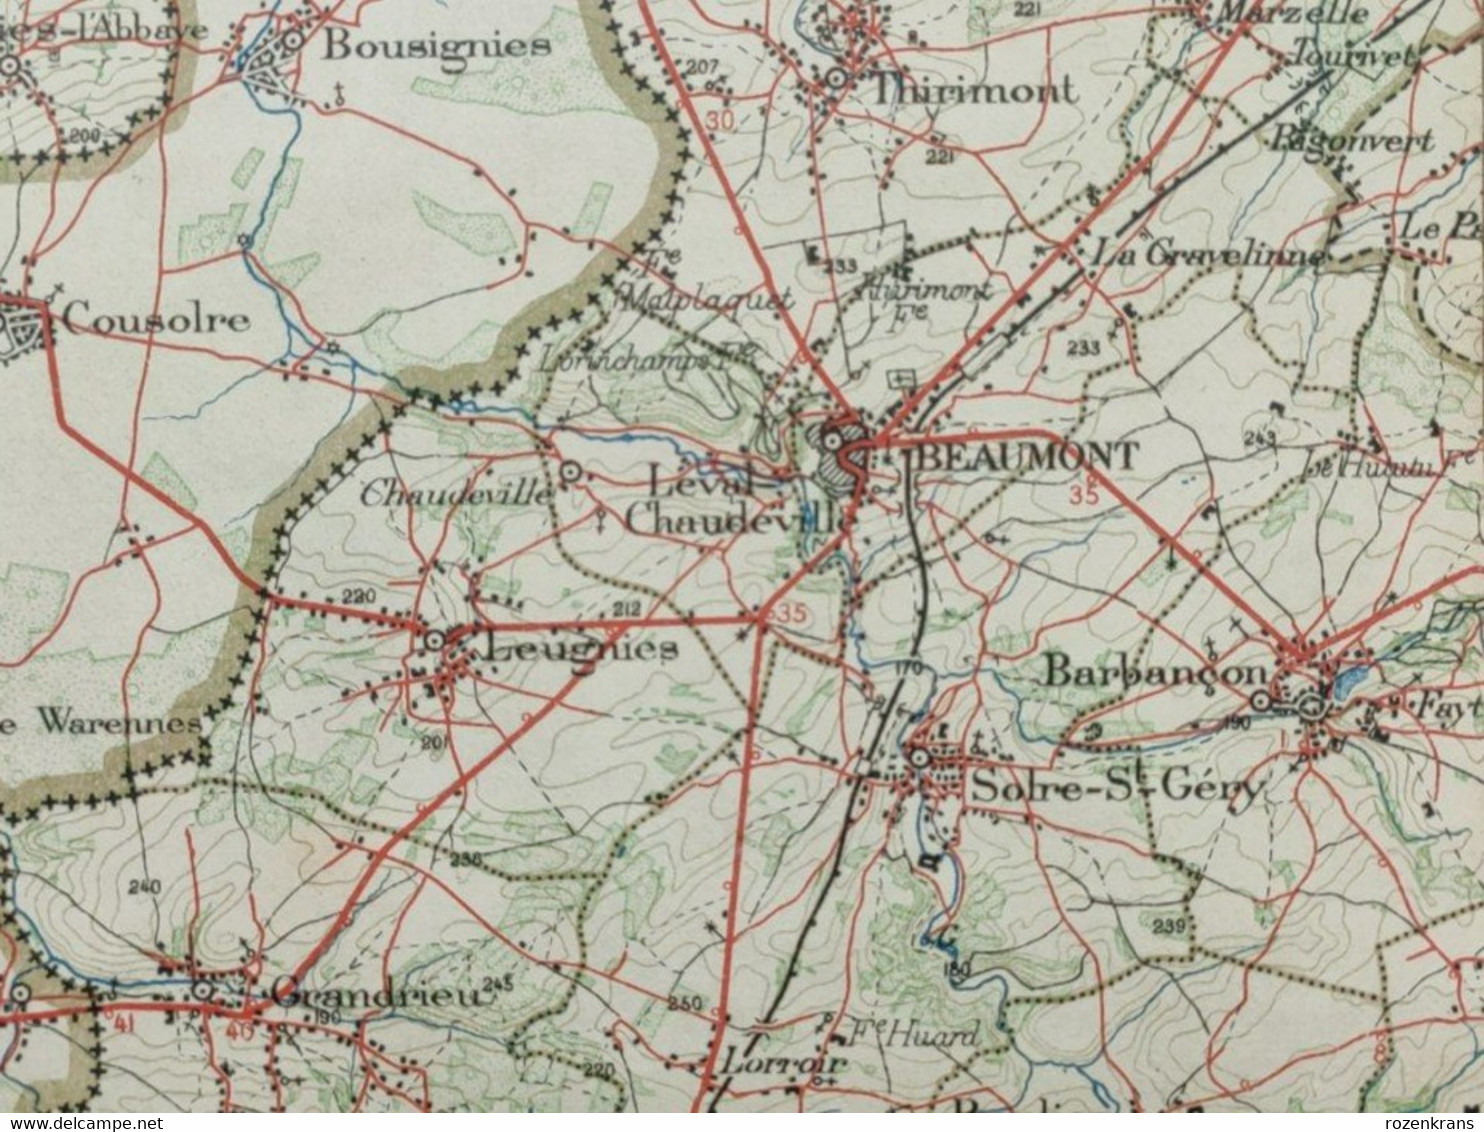 Carte topographique toilée militaire STAFKAART 1908 Thuin Florennes Philippeville Chimay Cerfontaine Beaumont Couvin